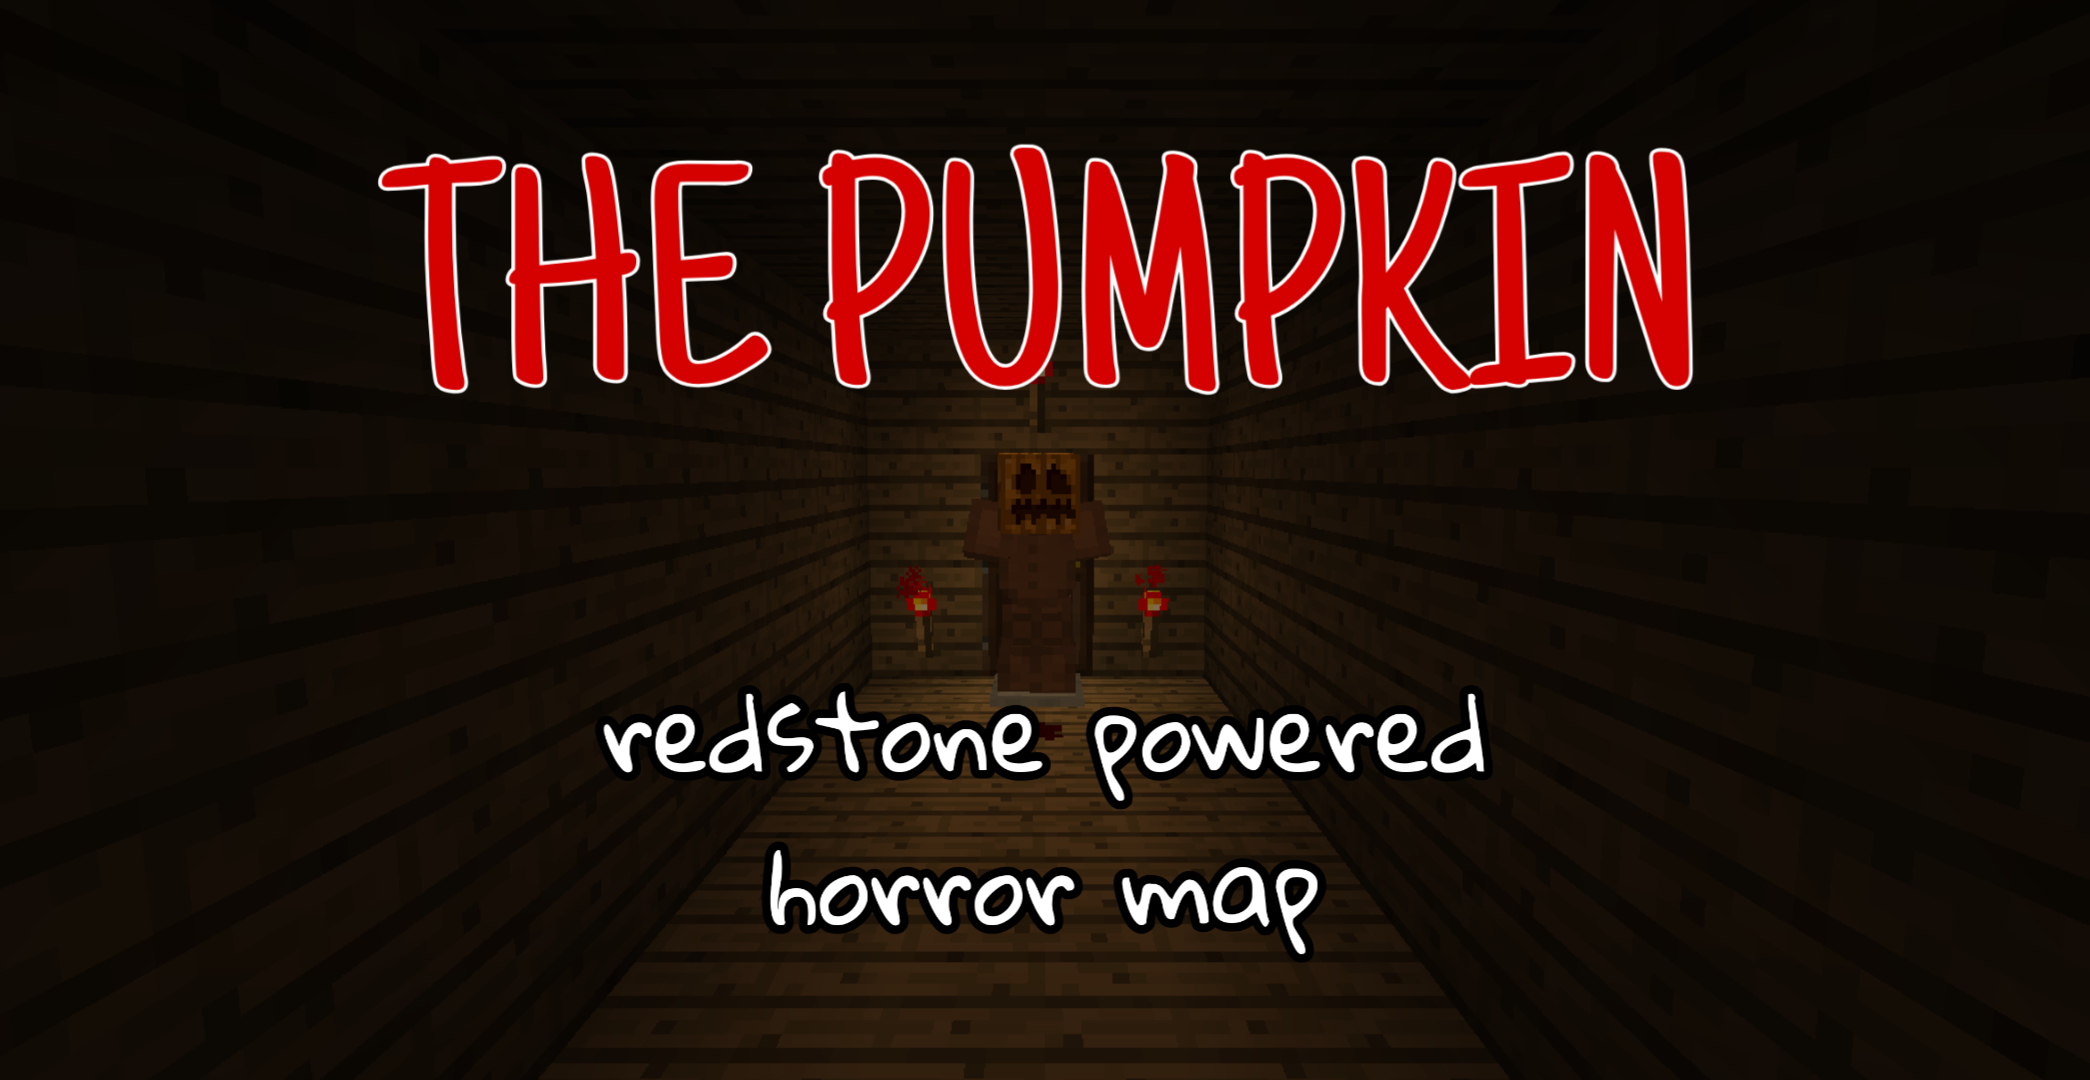 İndir The Pumpkin için Minecraft 1.14.3